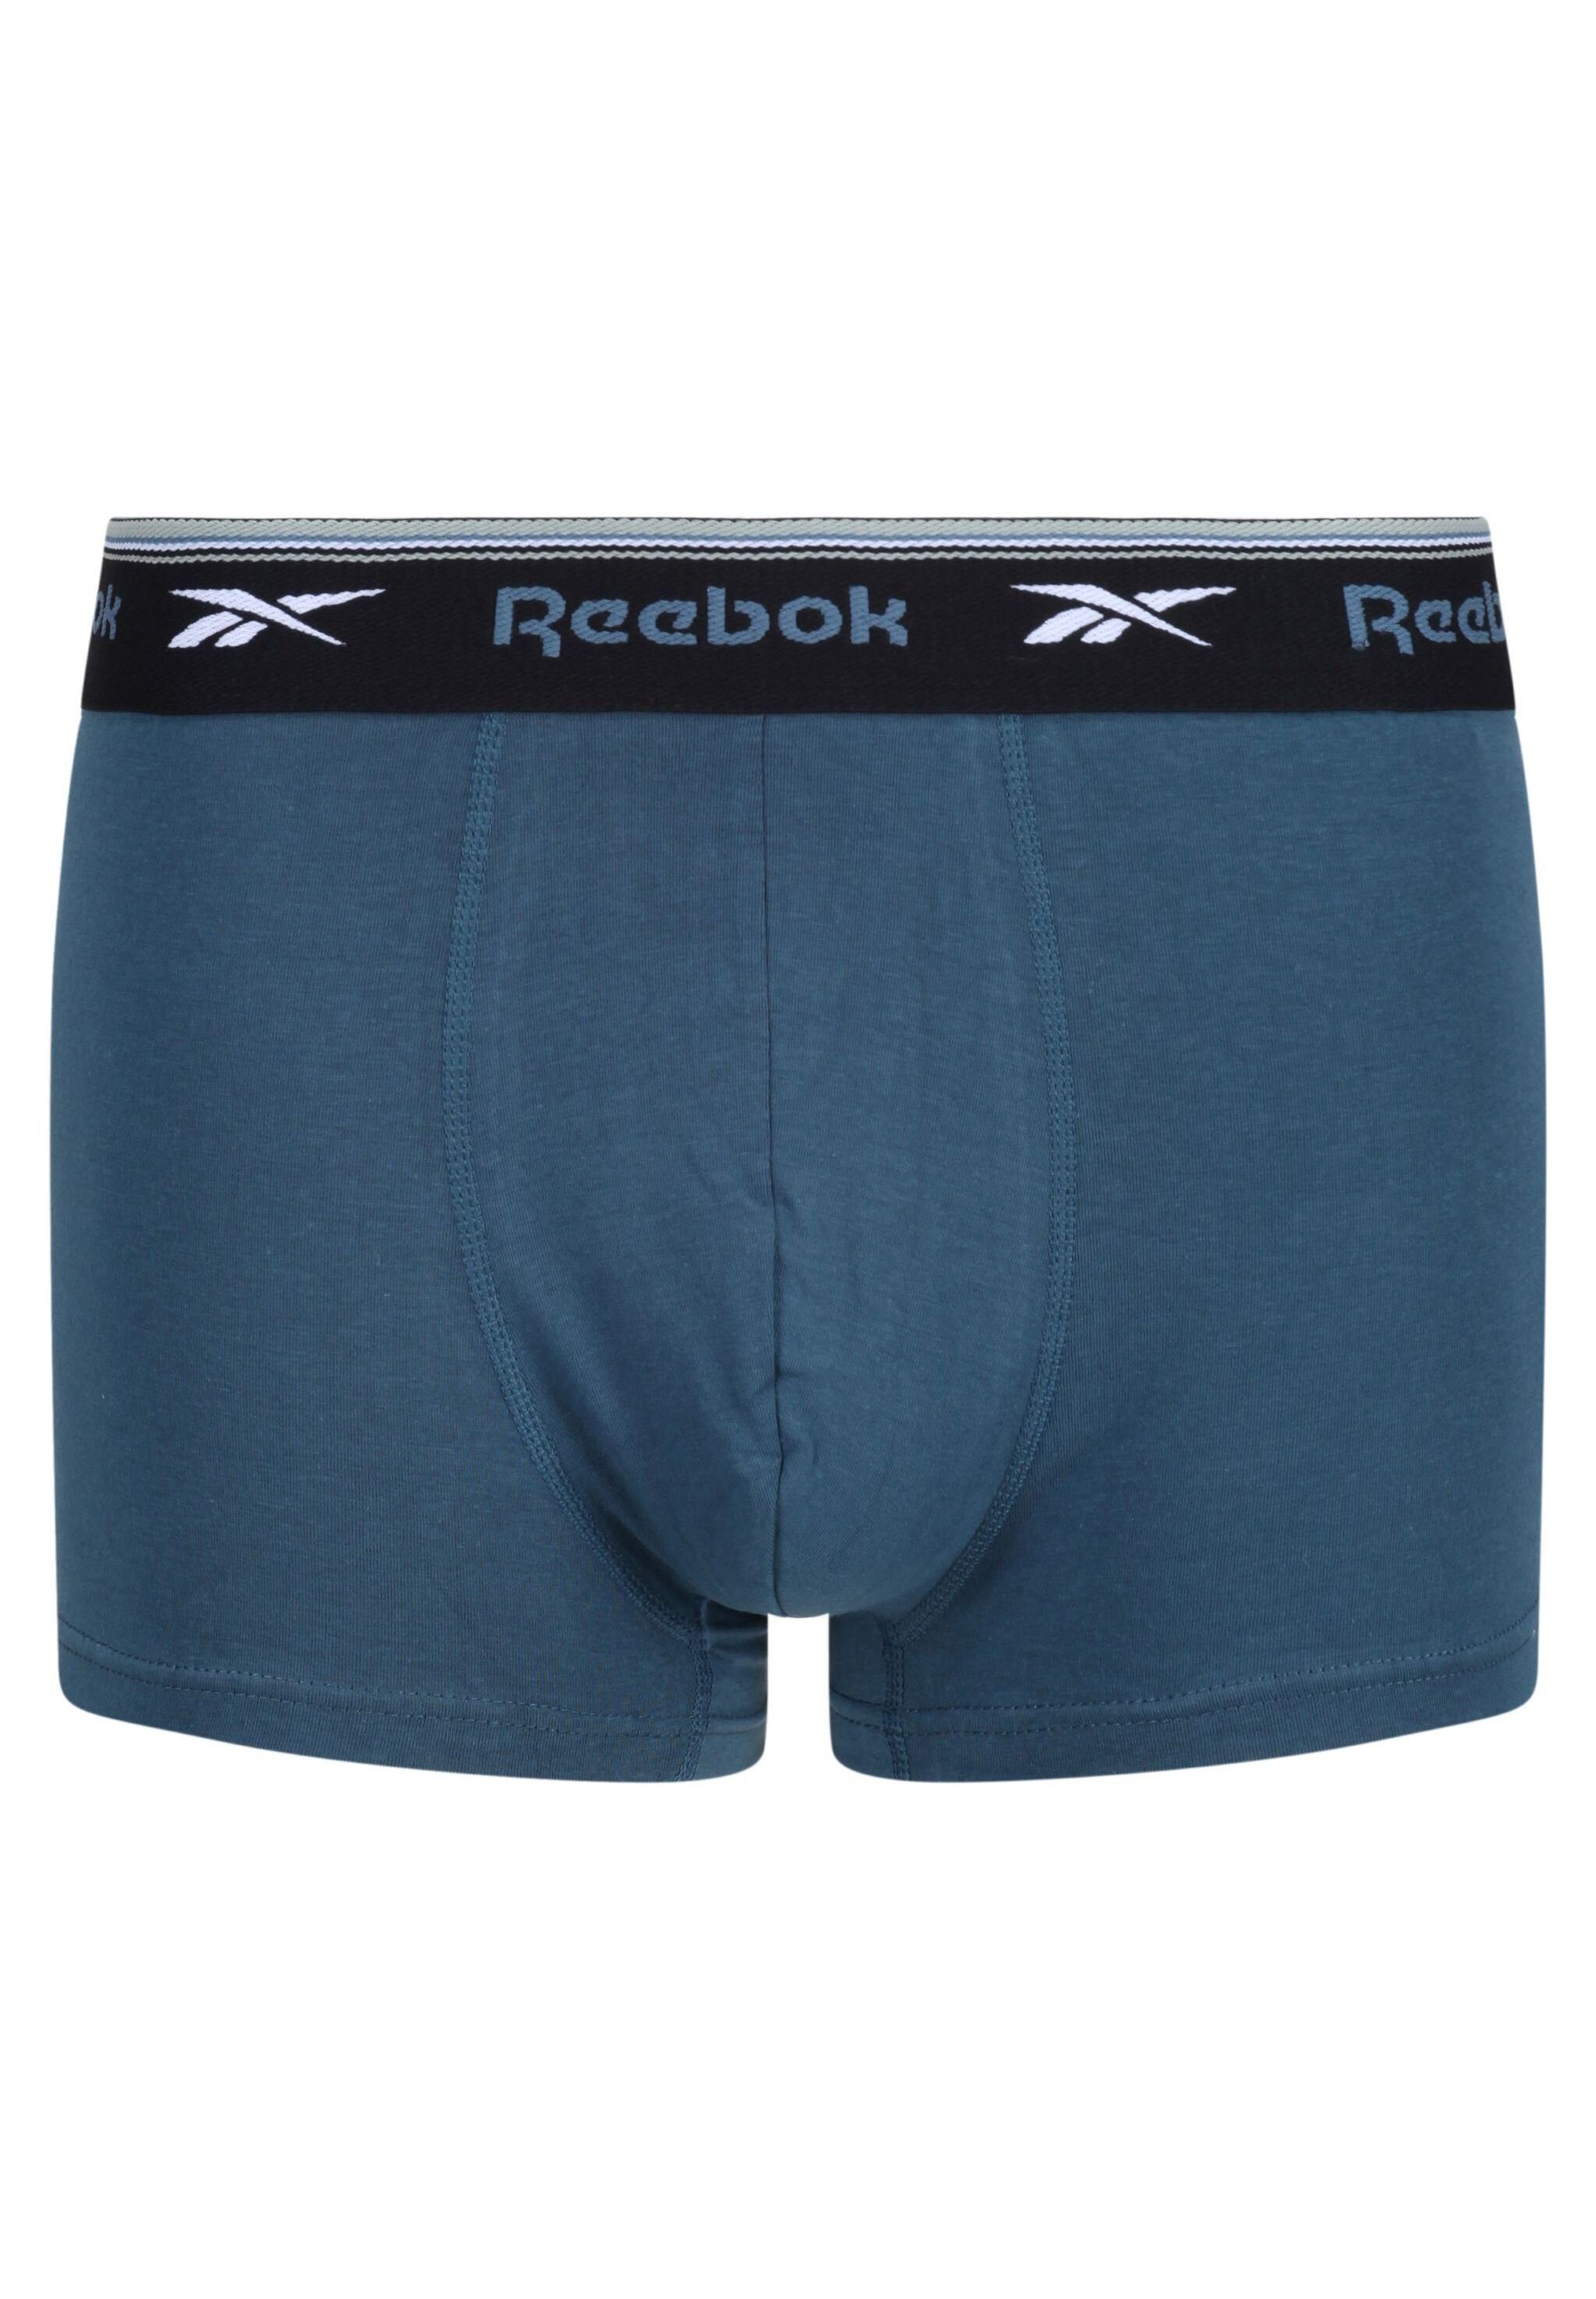 VectorRed/White/Blu Trunks Boxershorts (5-St) Reebok Sport 3-Pack